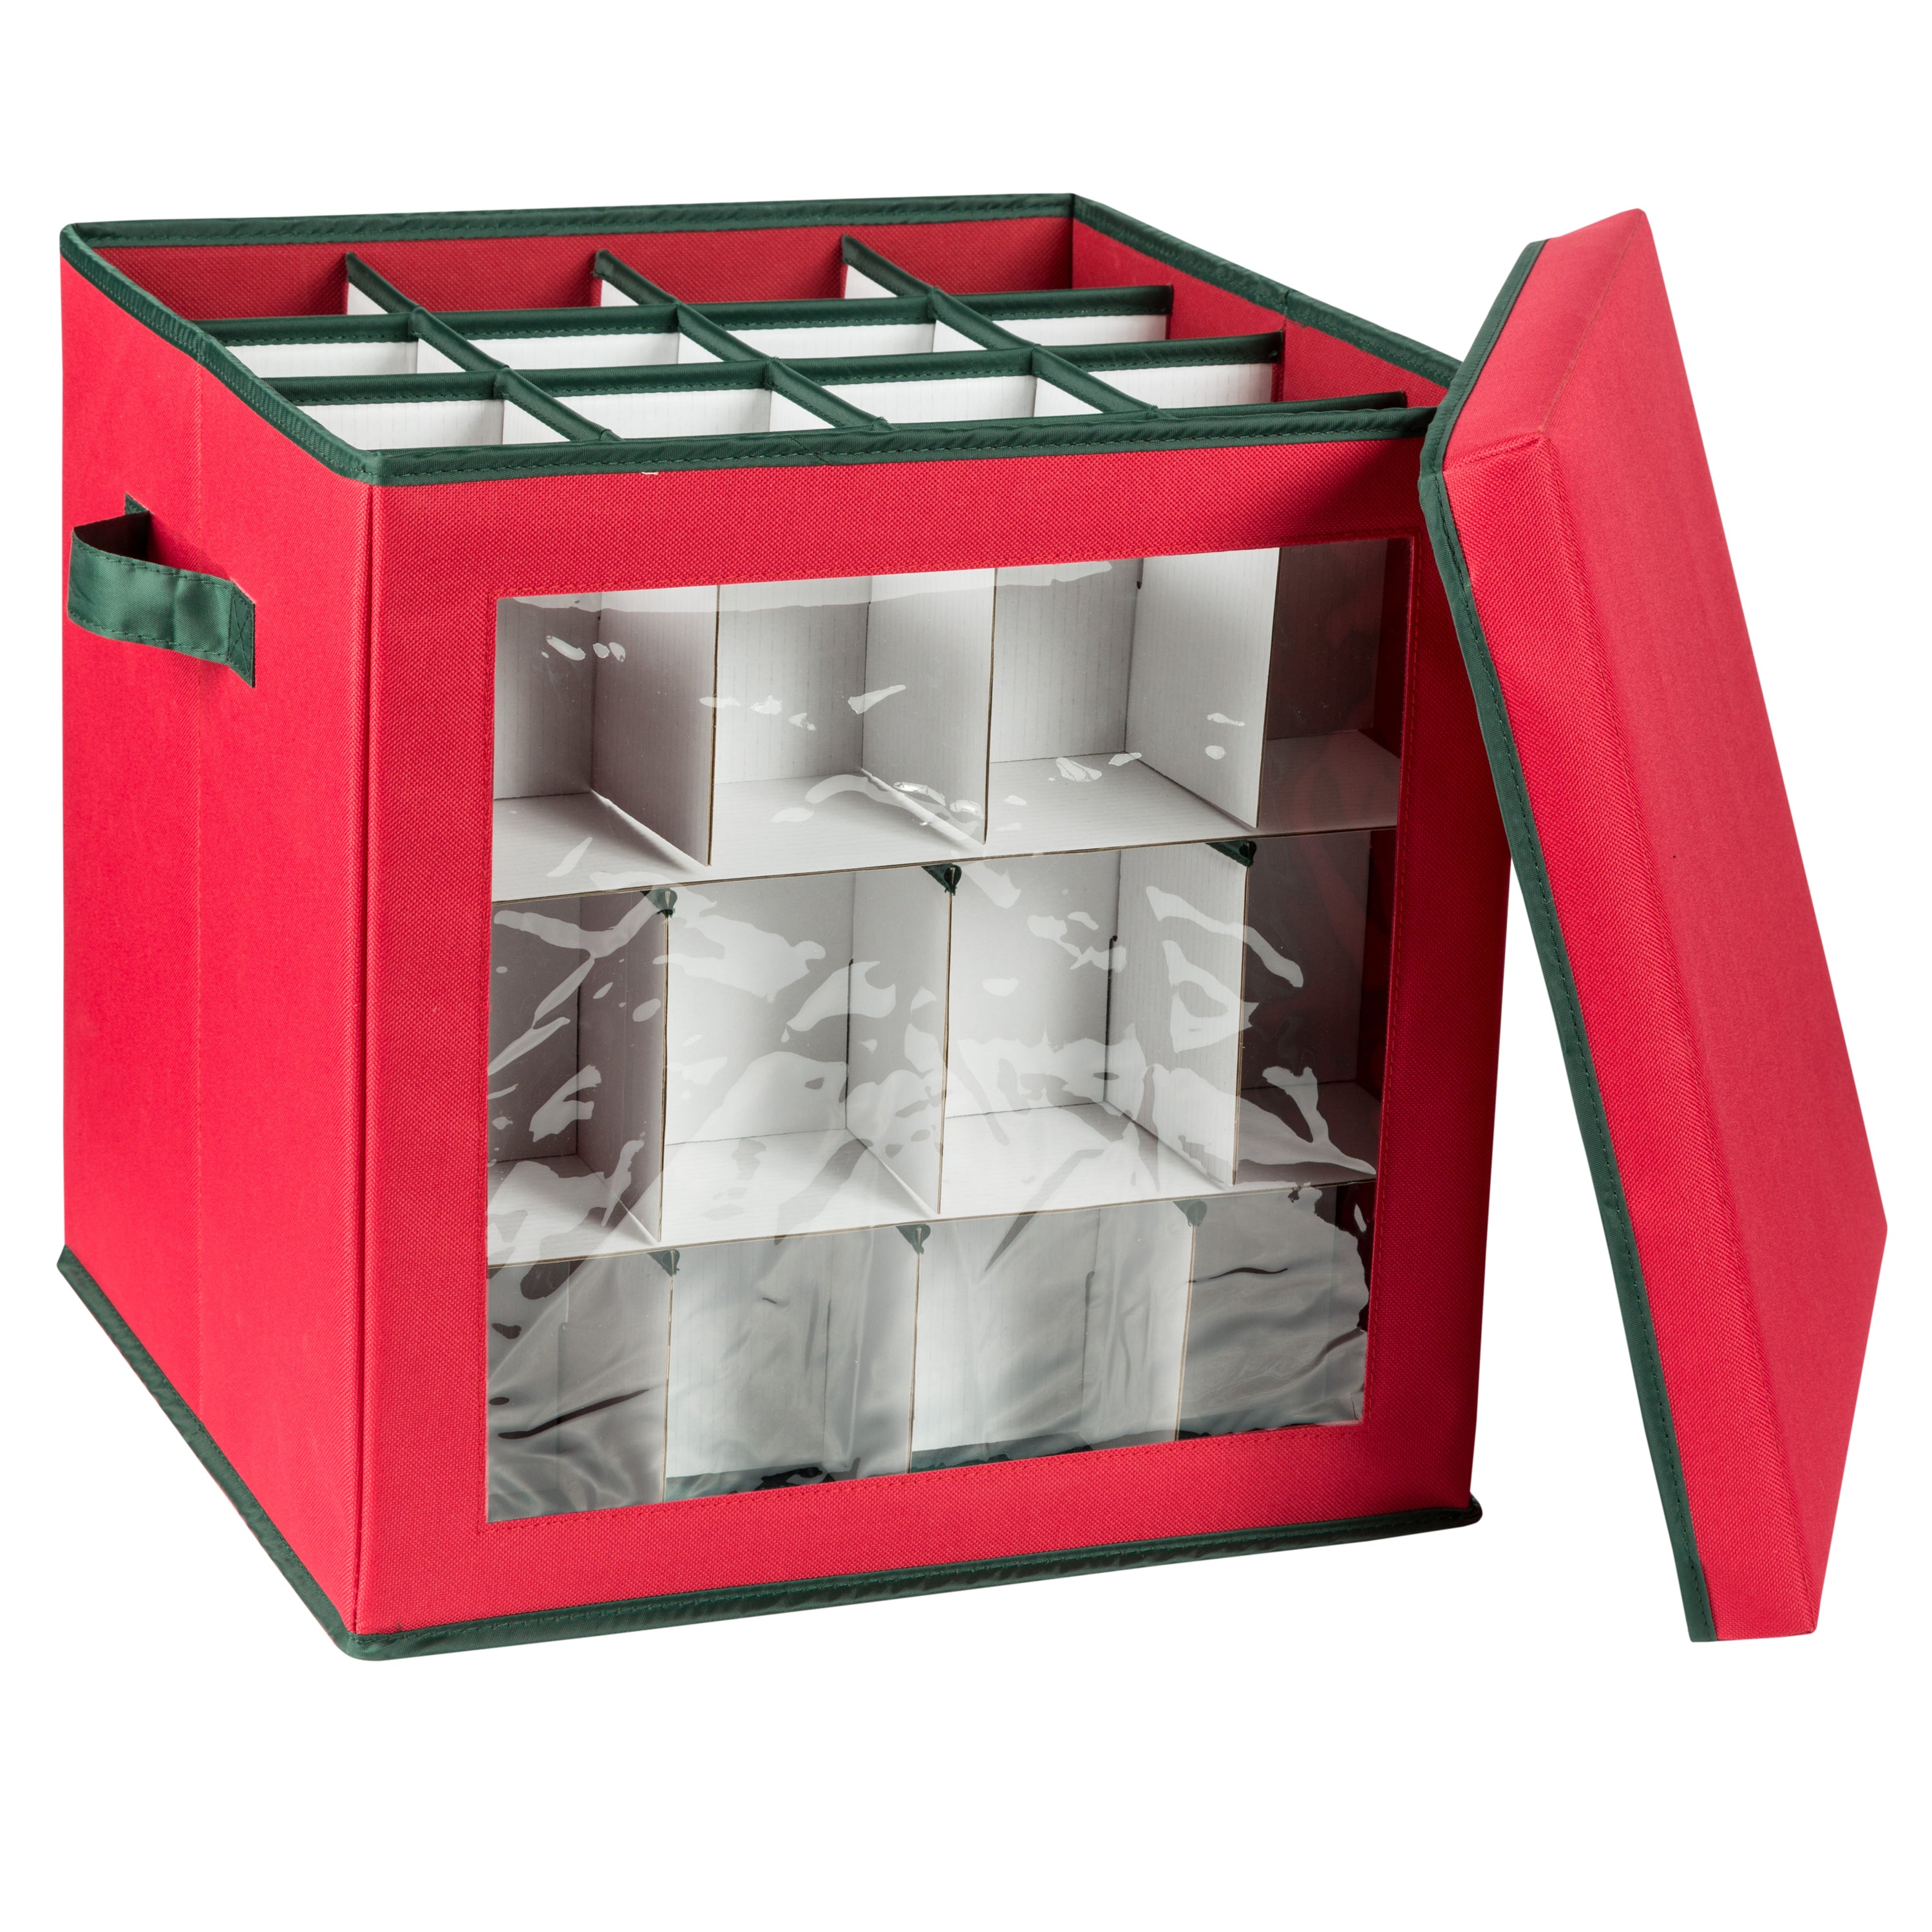 Red Holiday Light Storage Box